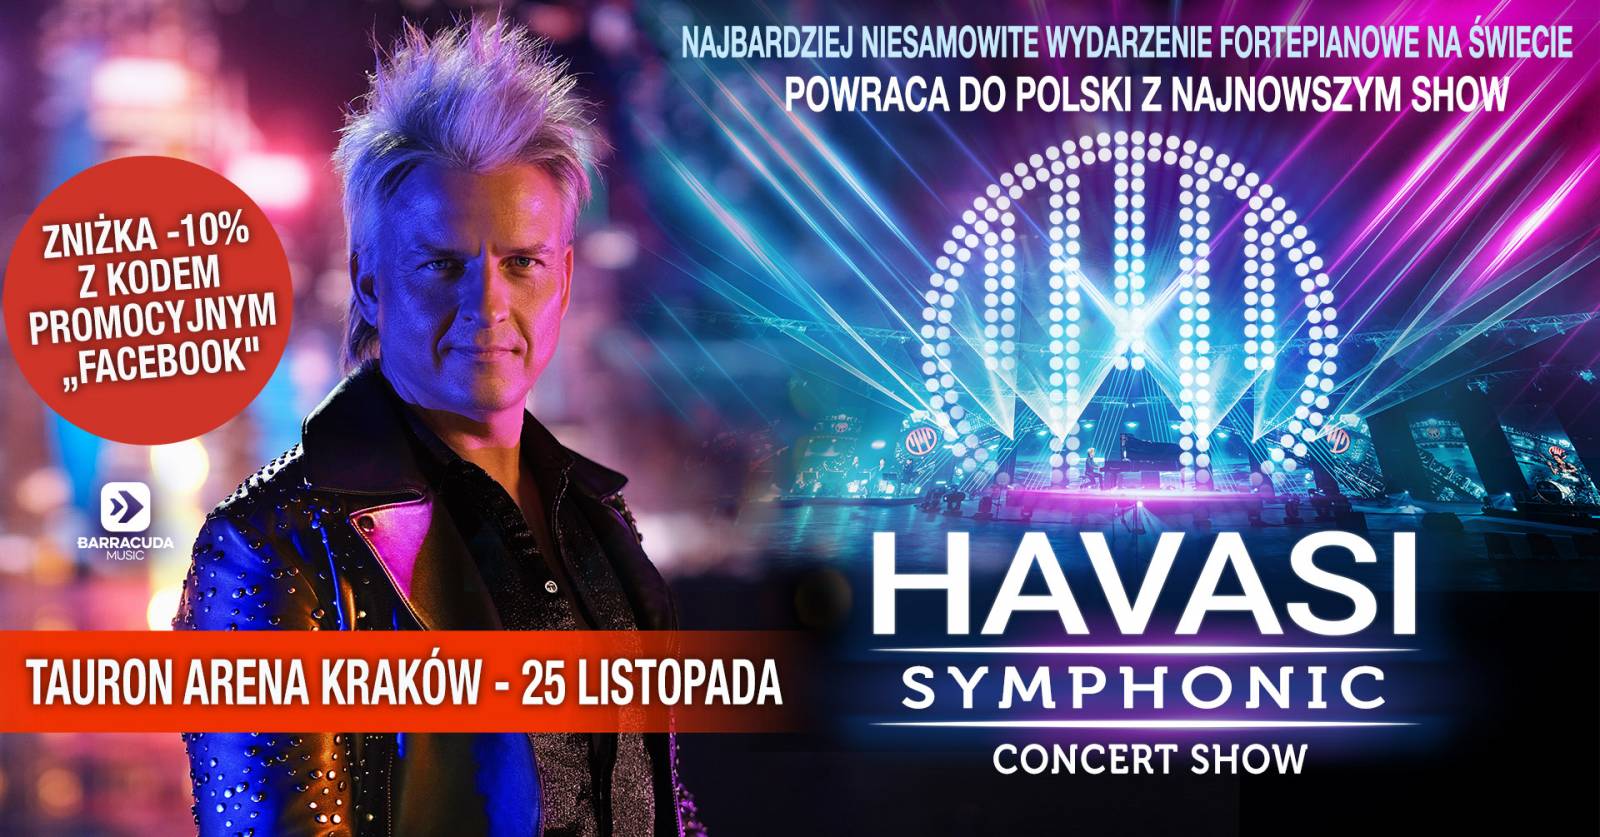 HAVASI Symphonic at Tauron Arena Kraków